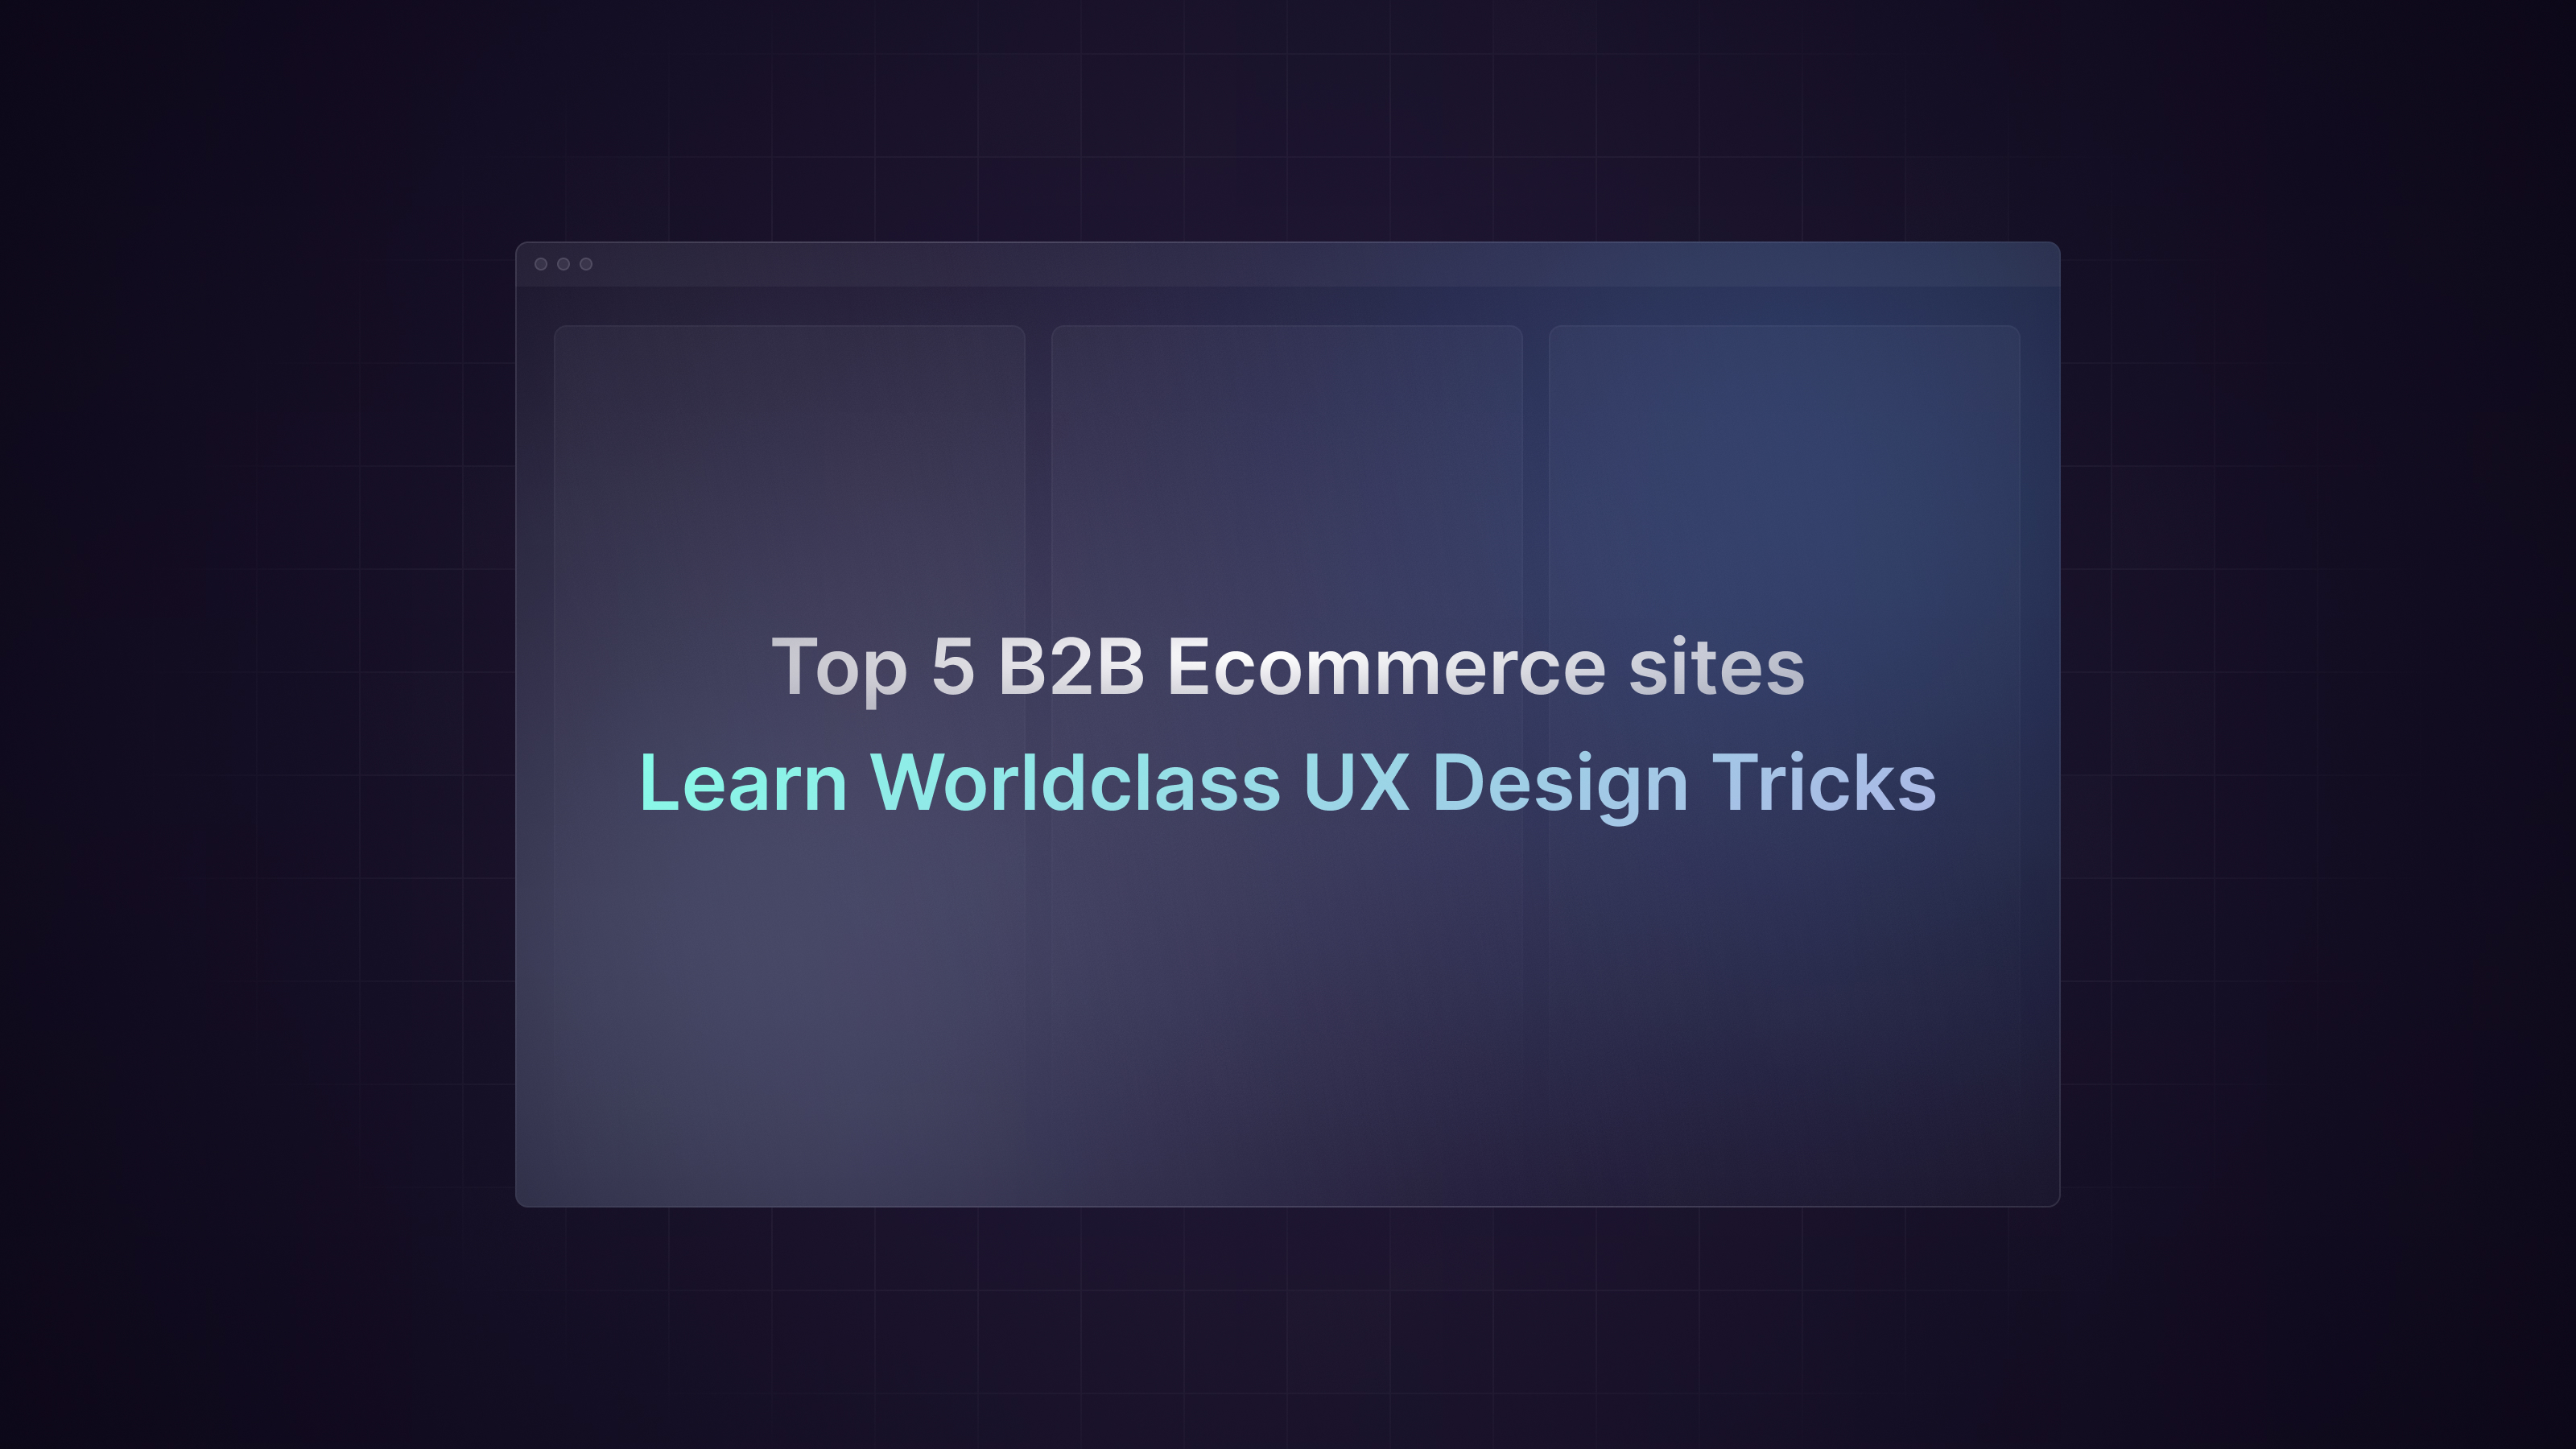 Top 5 B2B ecommerce sites: Learn worldclass UX design tricks